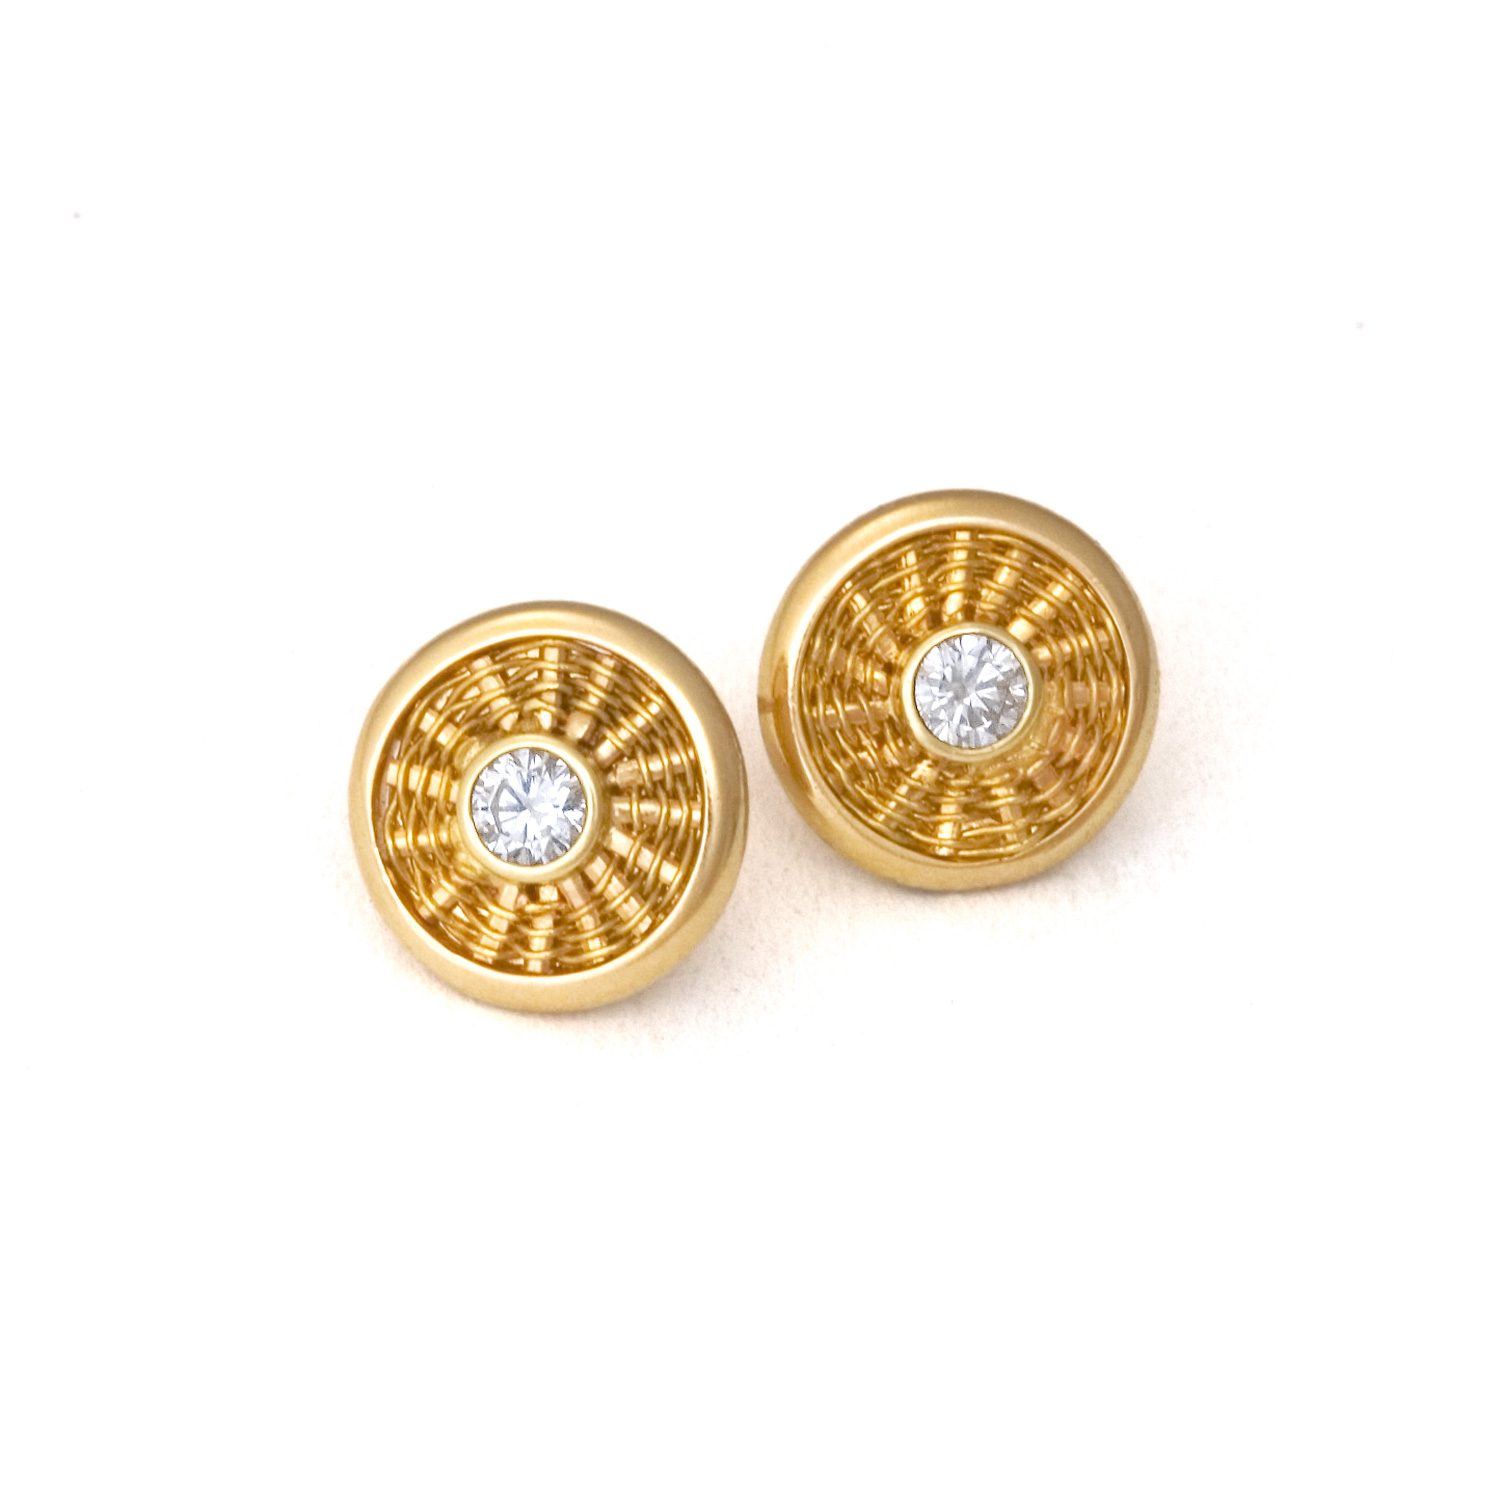 Sunburst Weave Stud Earrings in 18k gold with diamonds by Tamberlaine